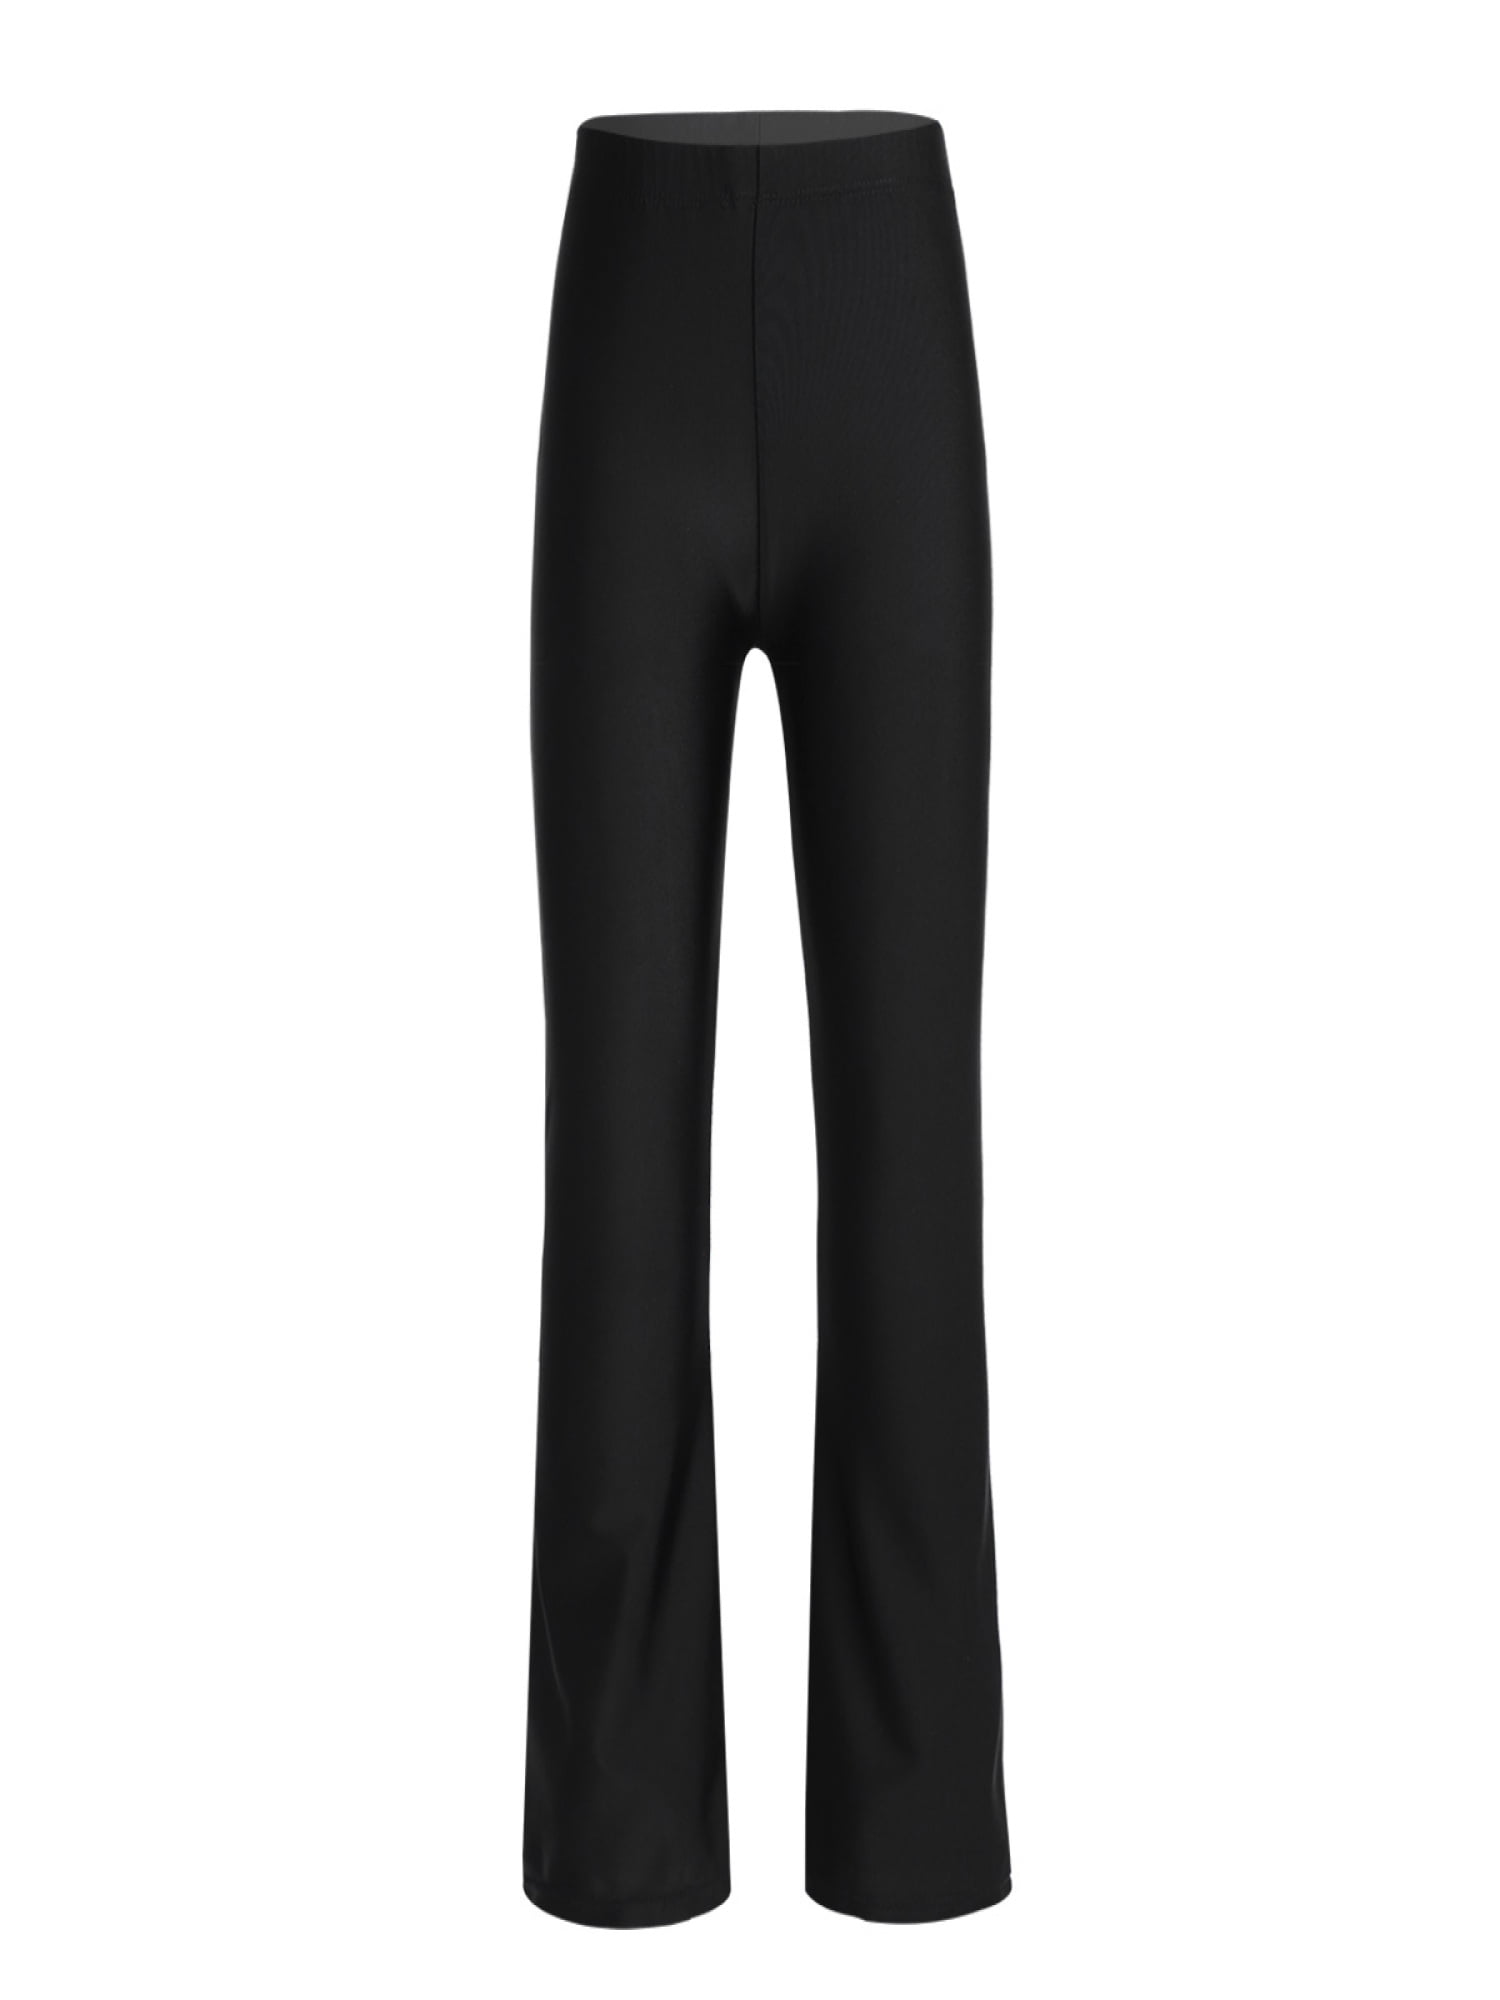 Freed black cotton jazz pant size intermediate 